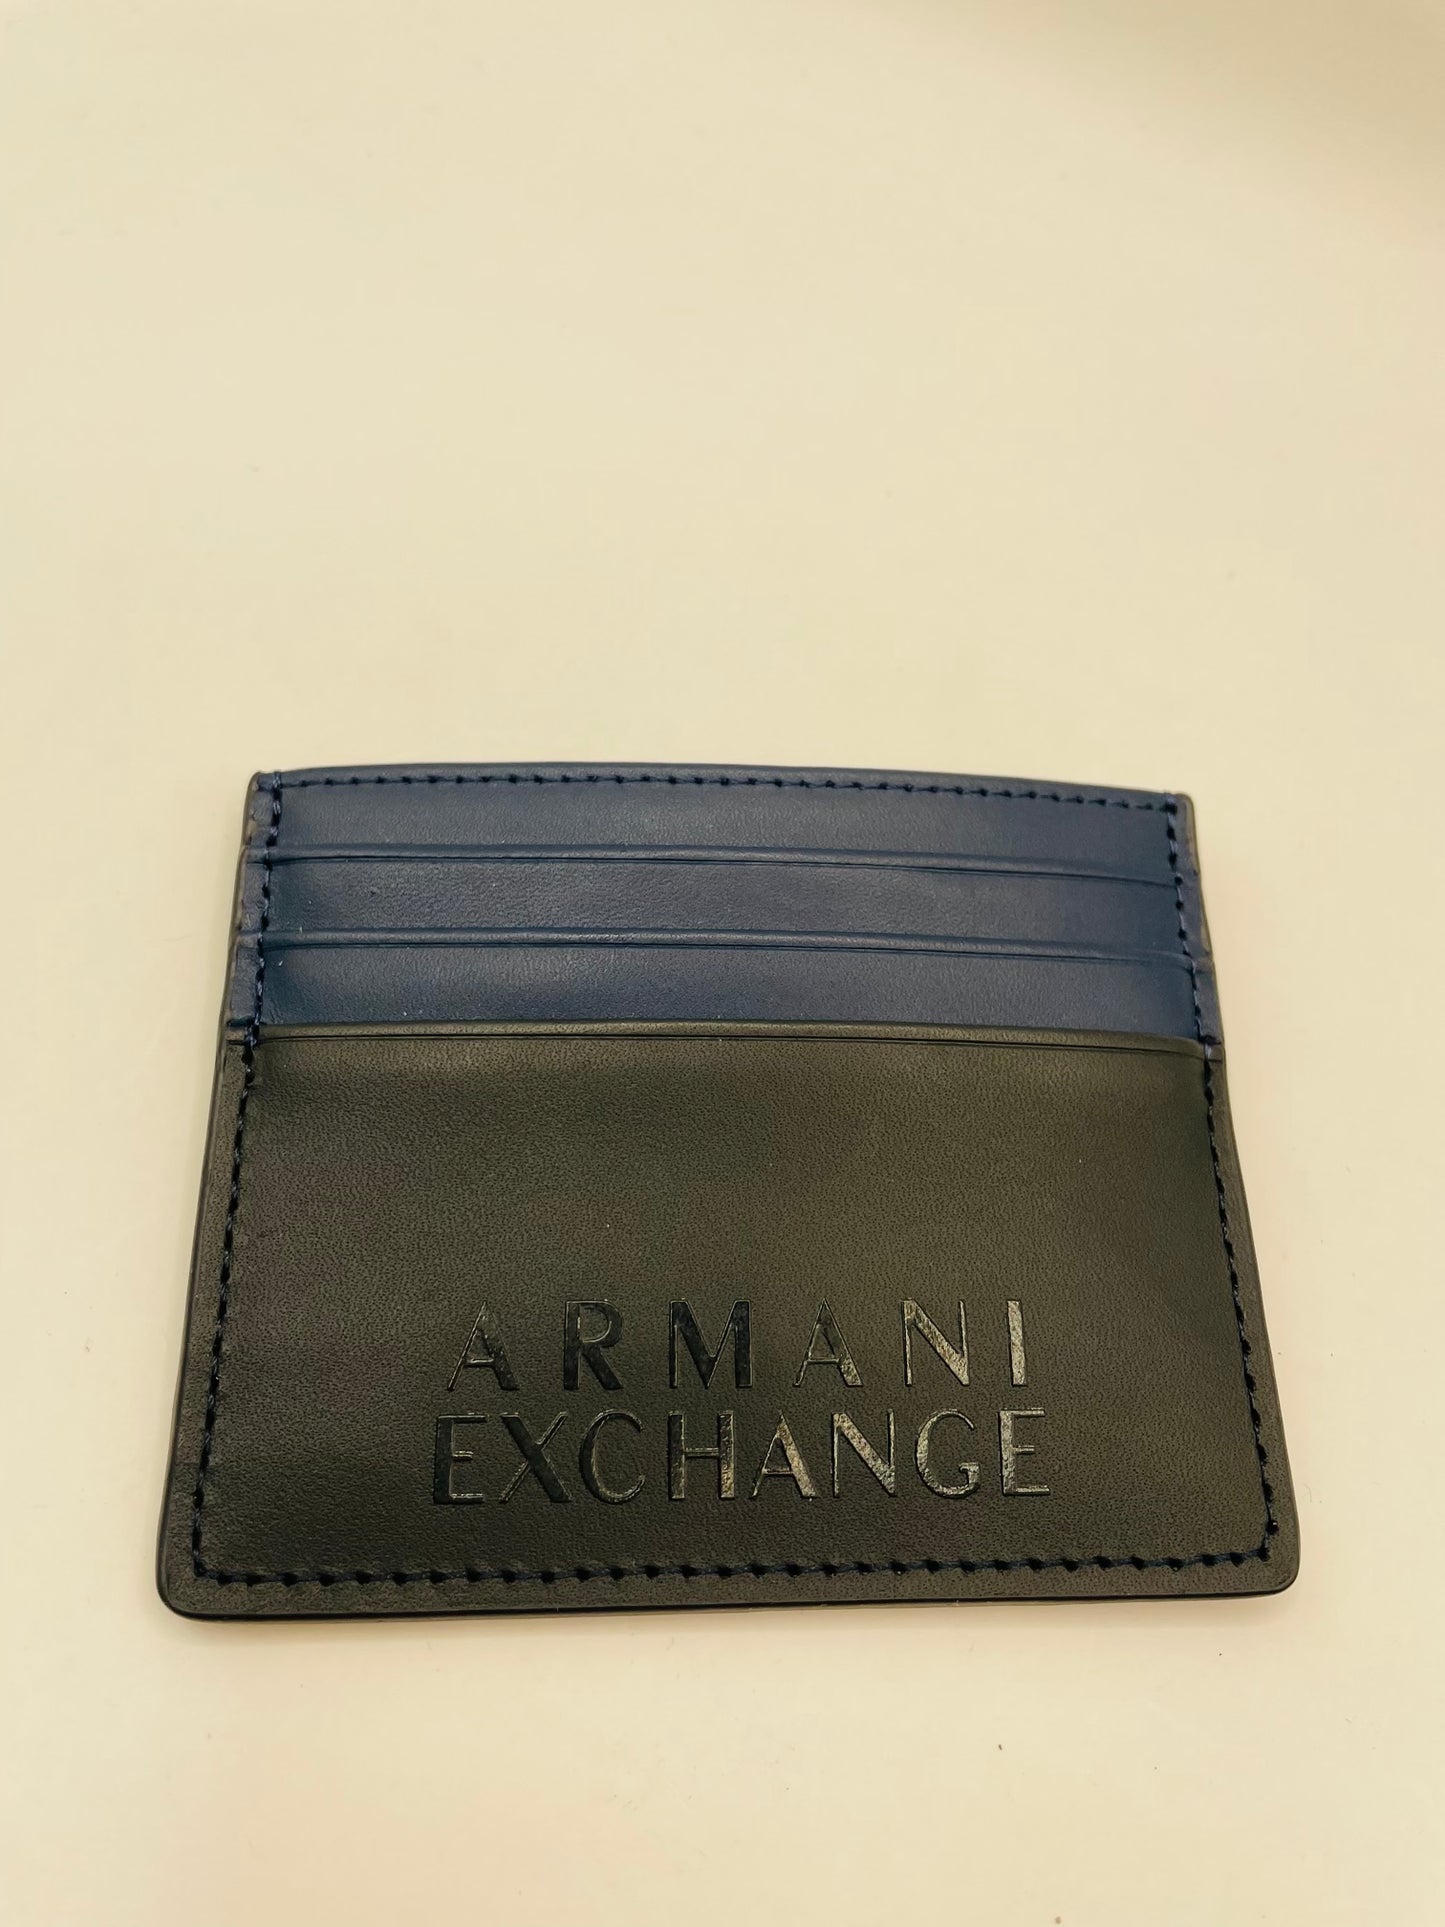 Armani exchange card holder